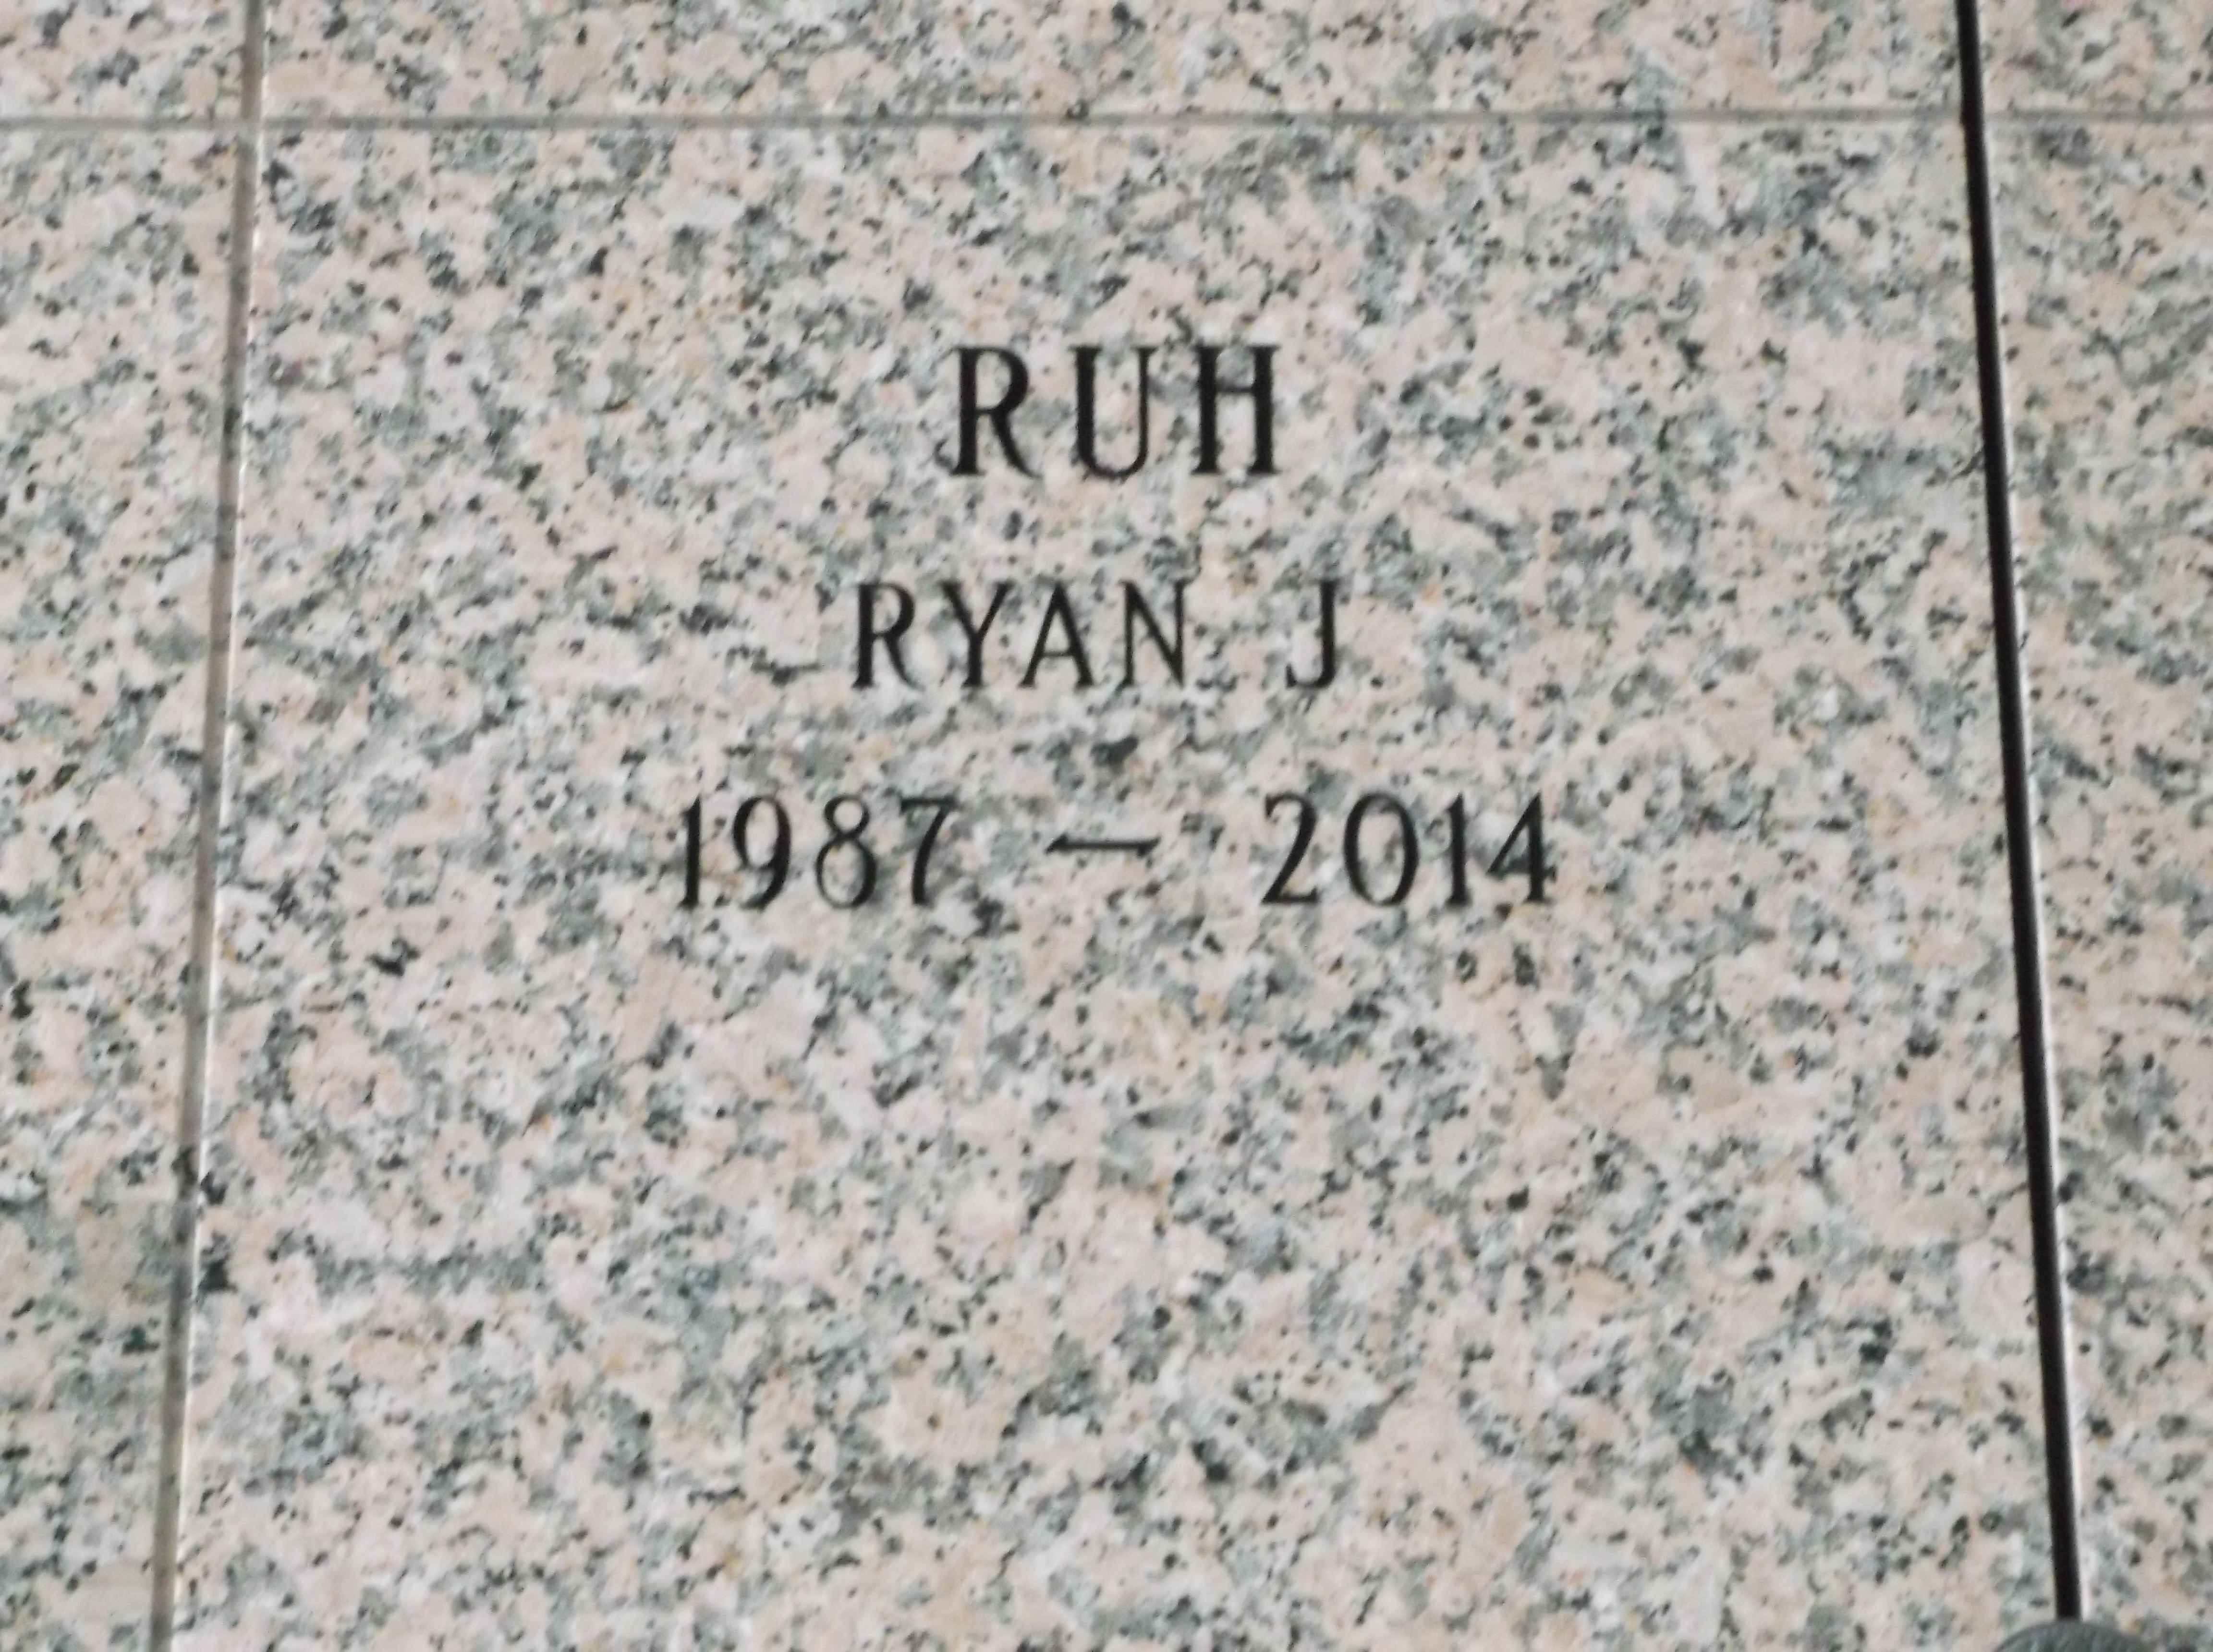 Ryan J Ruh